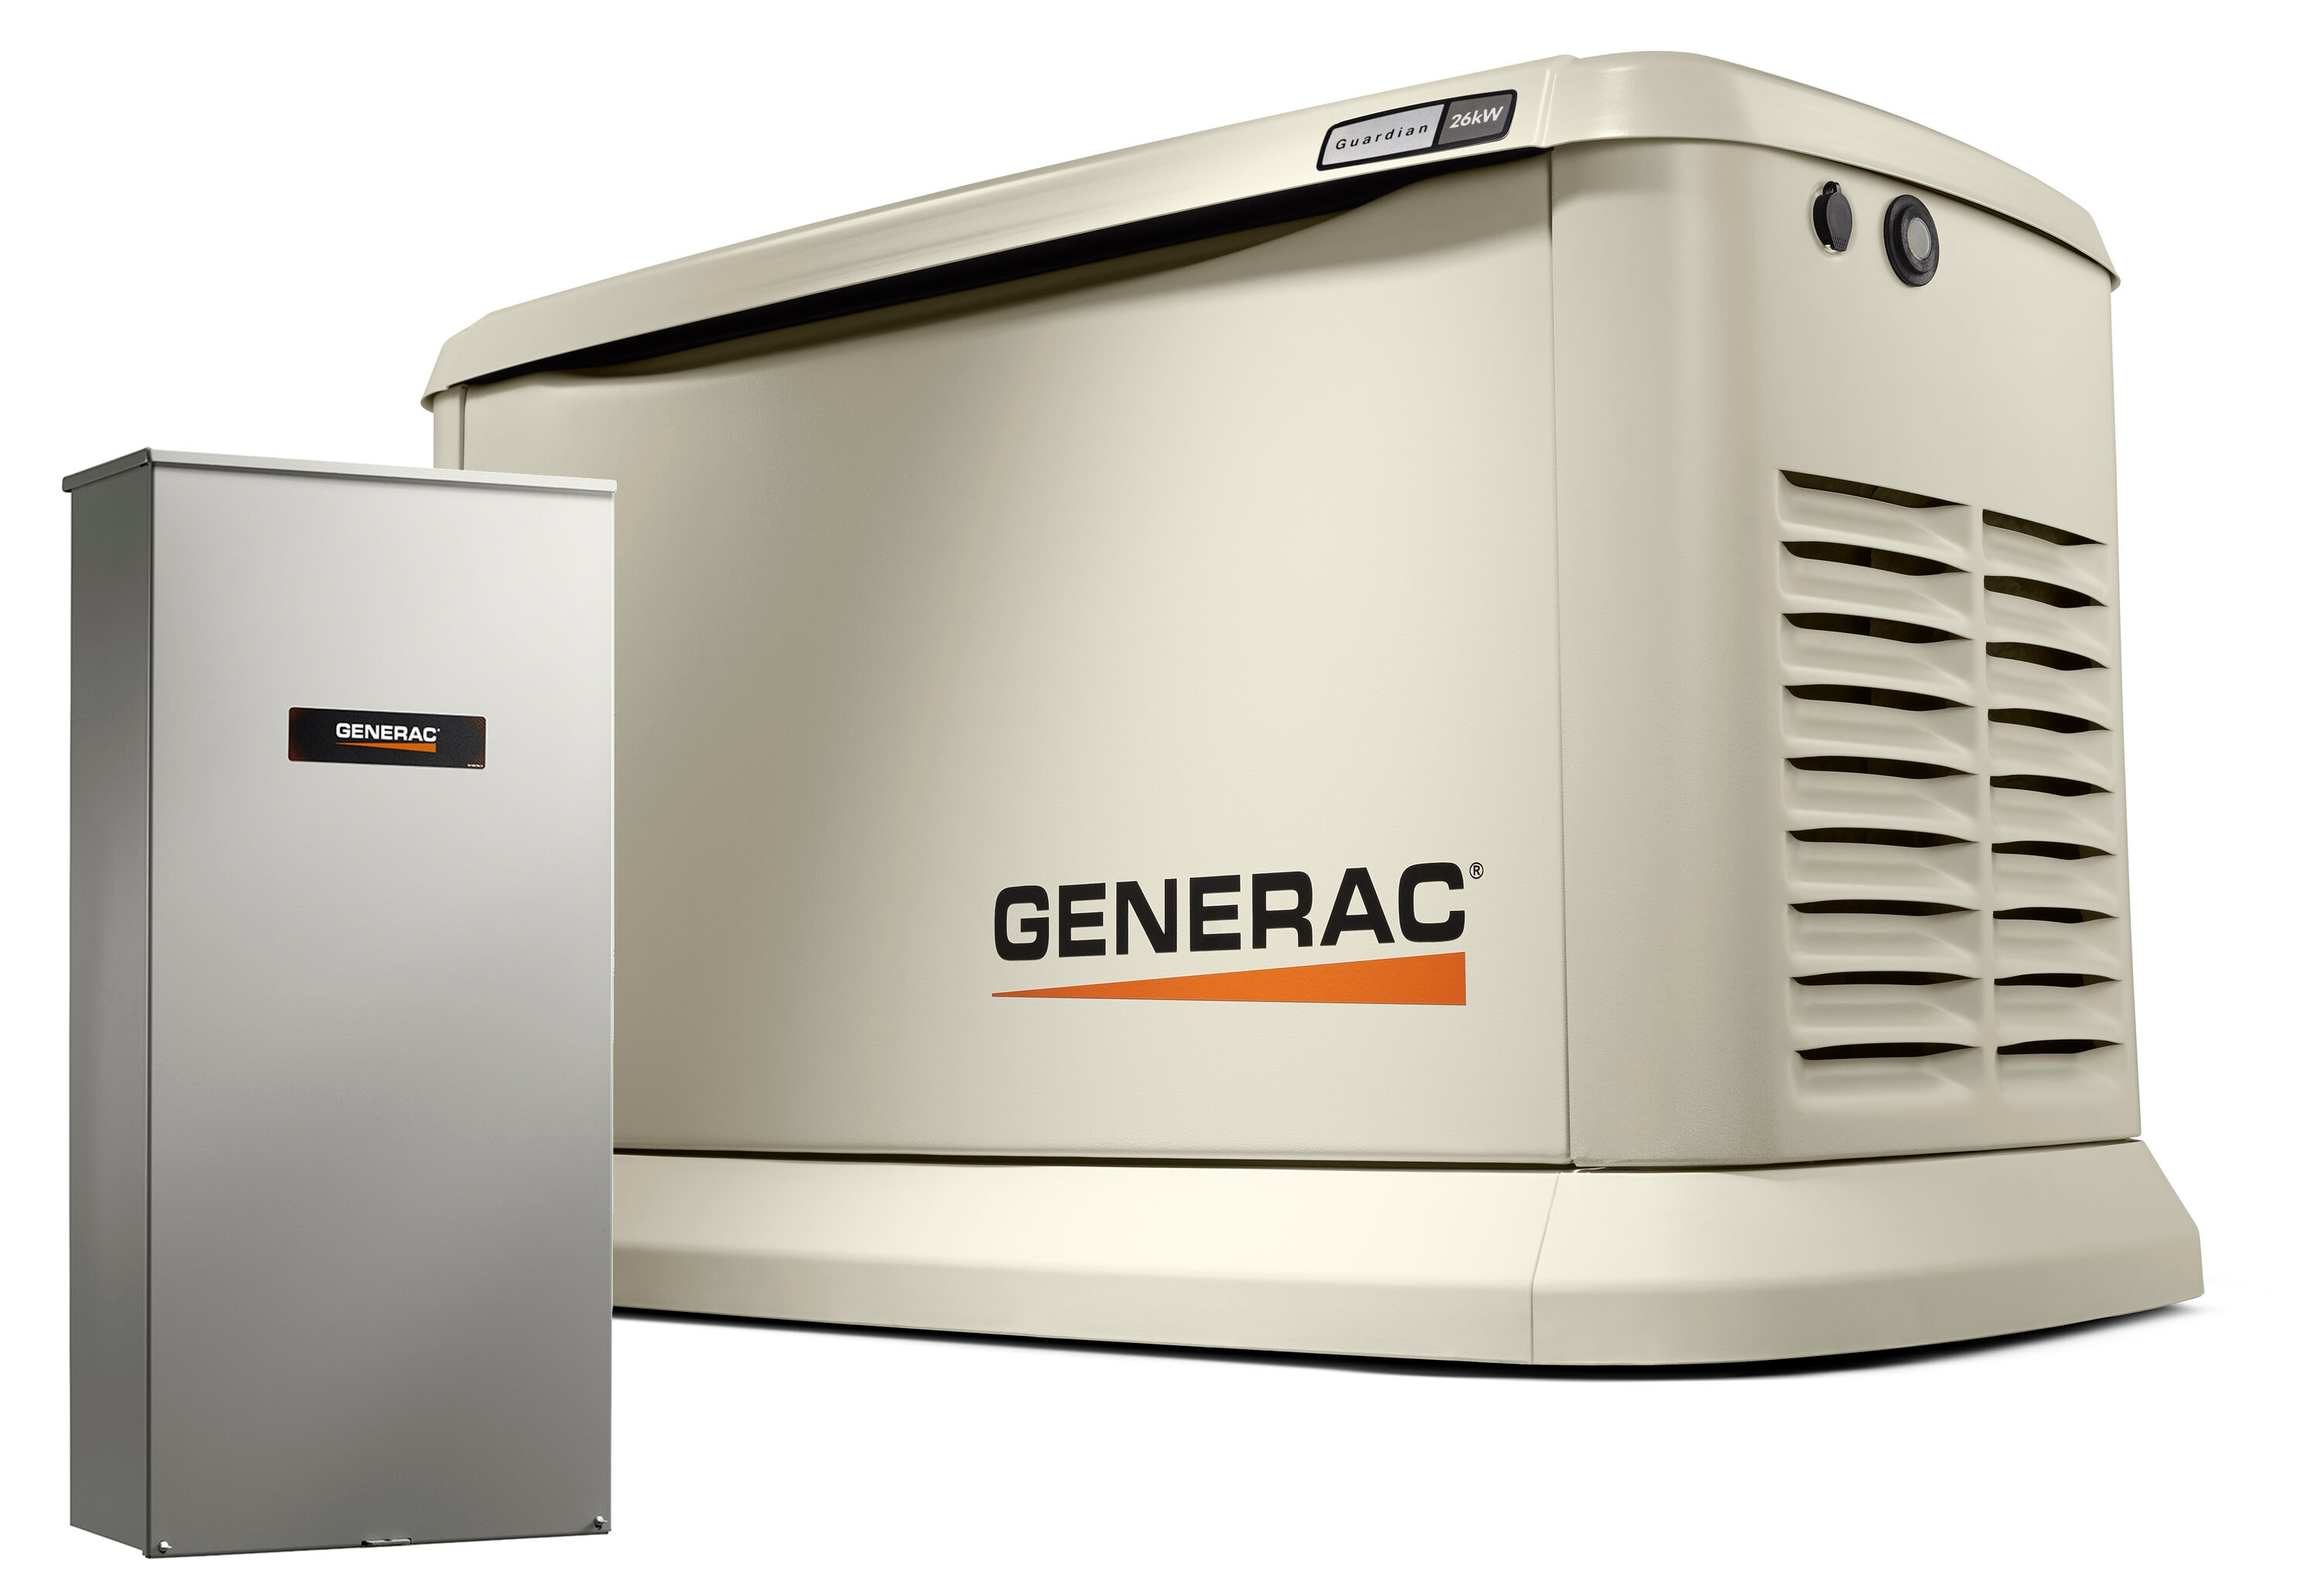 Transfer switch kit Generators at